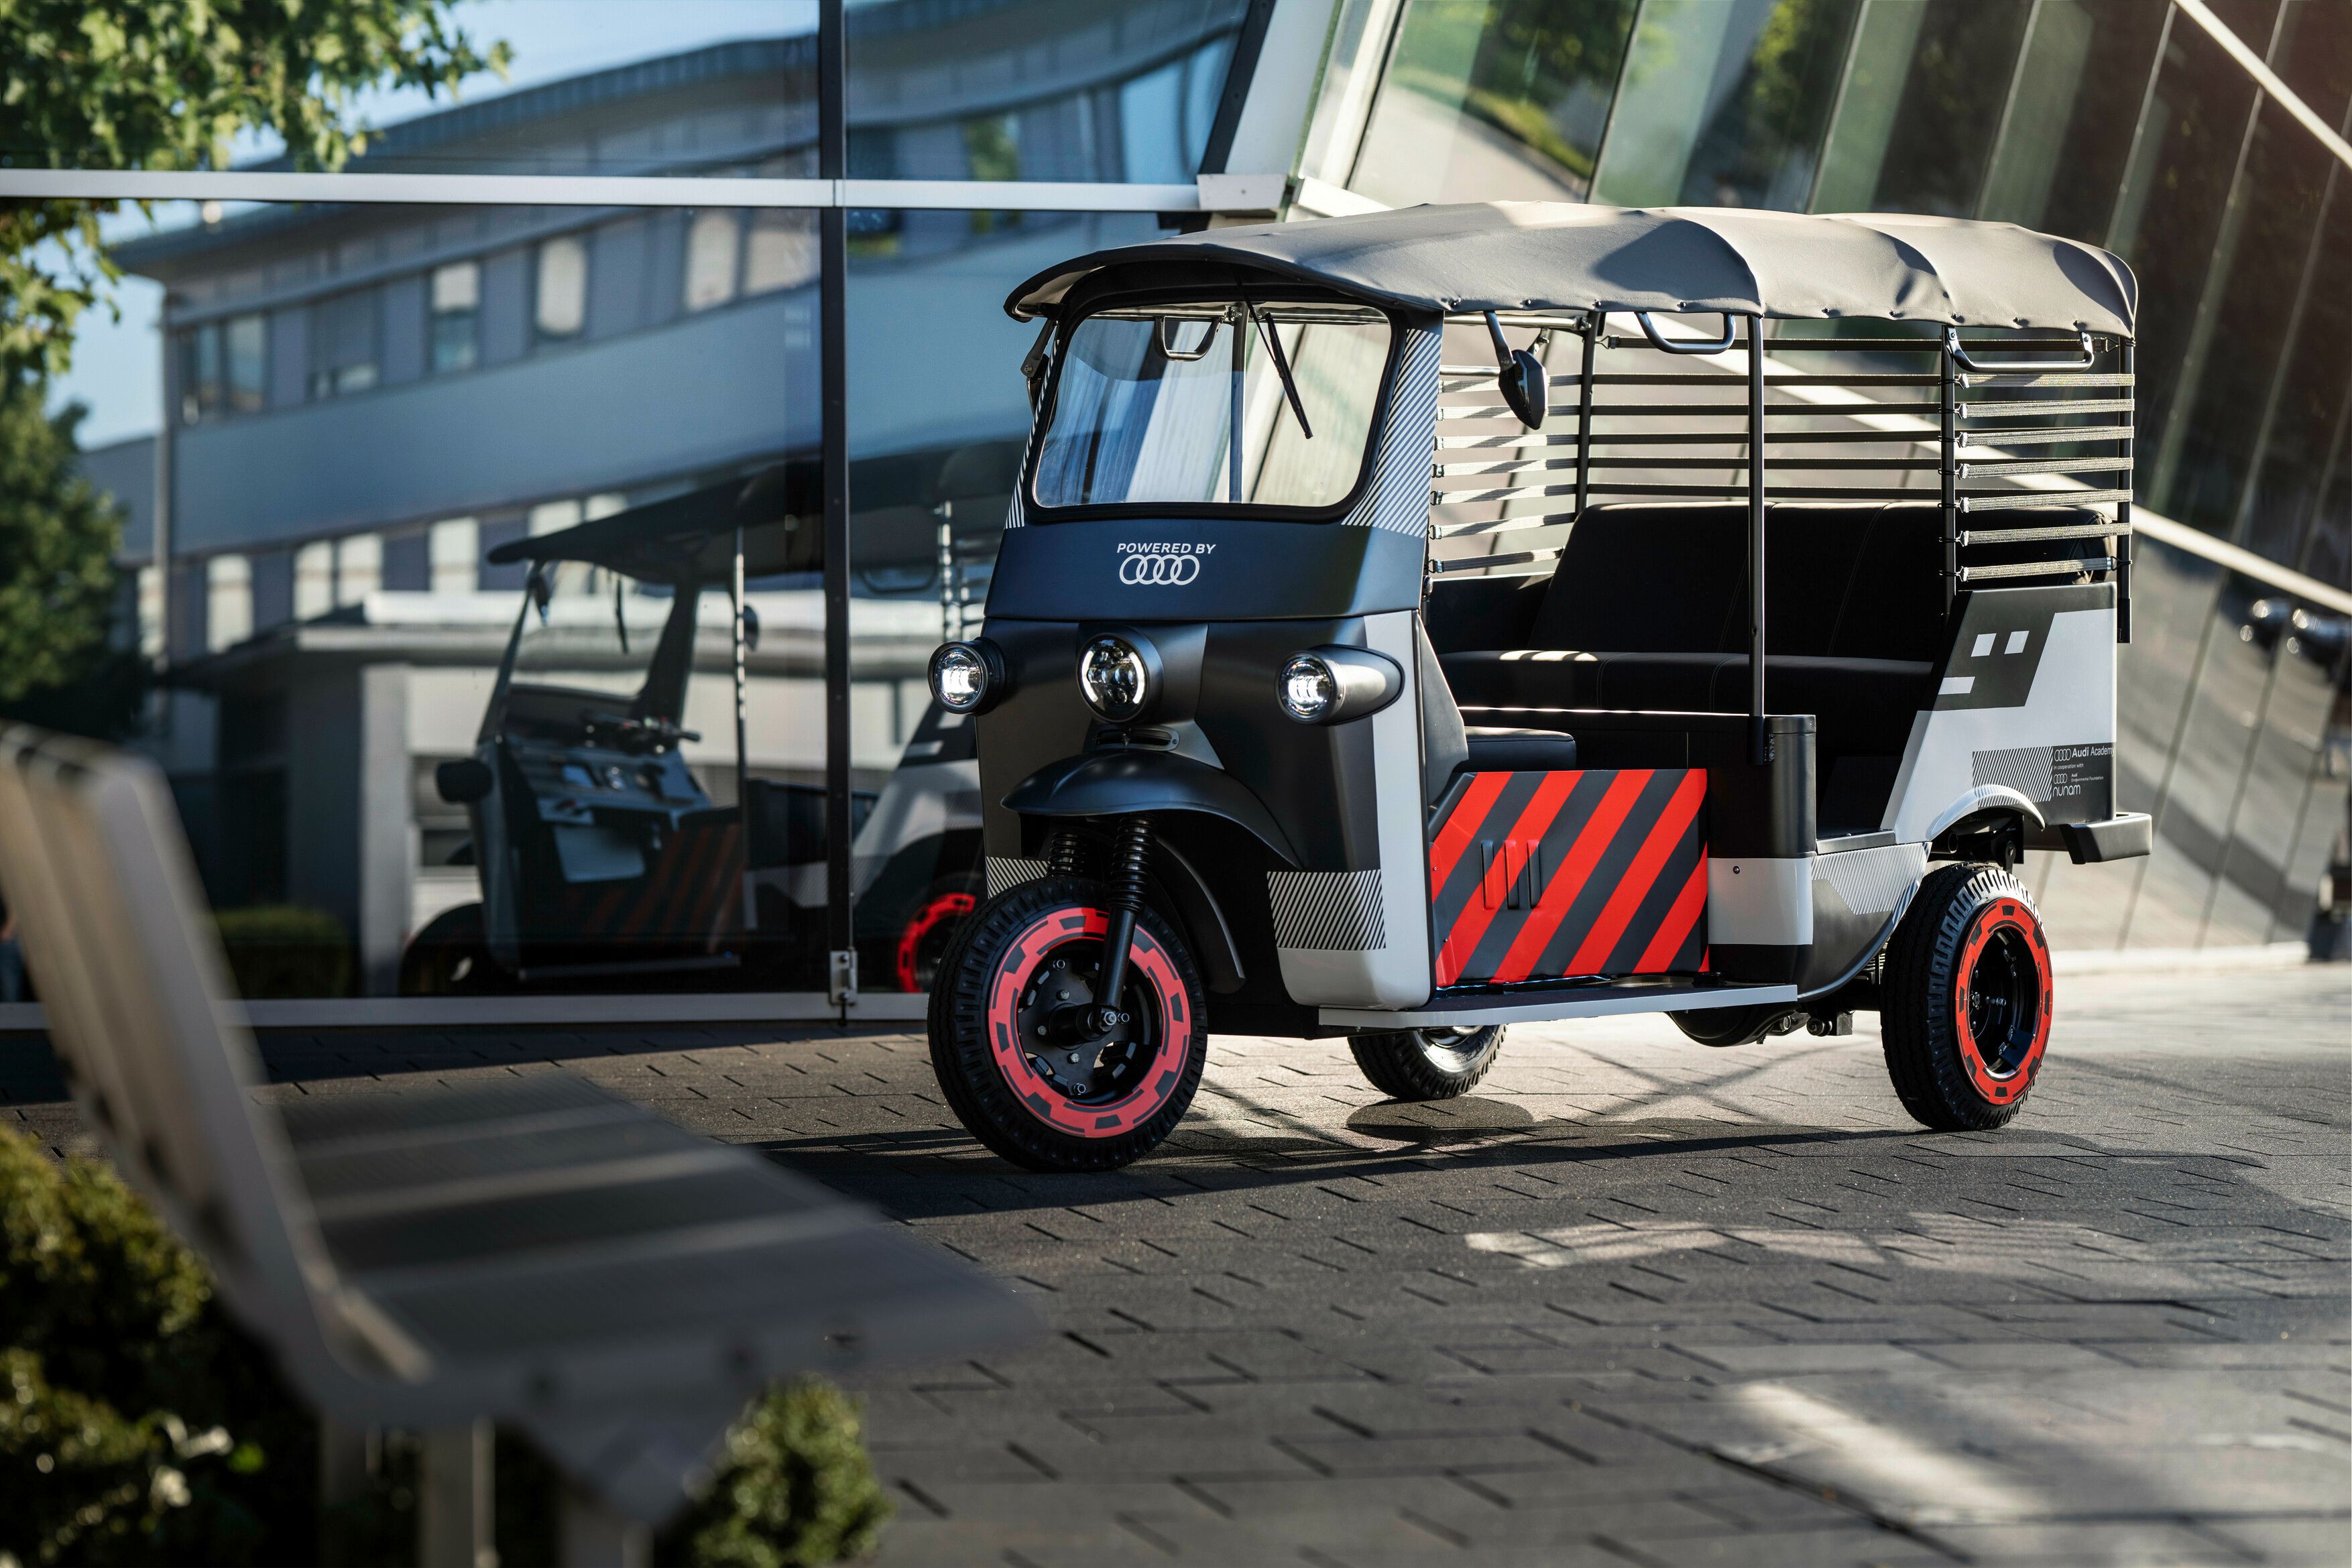 A closer look at the Audi and Nunam E-Rickshaw.